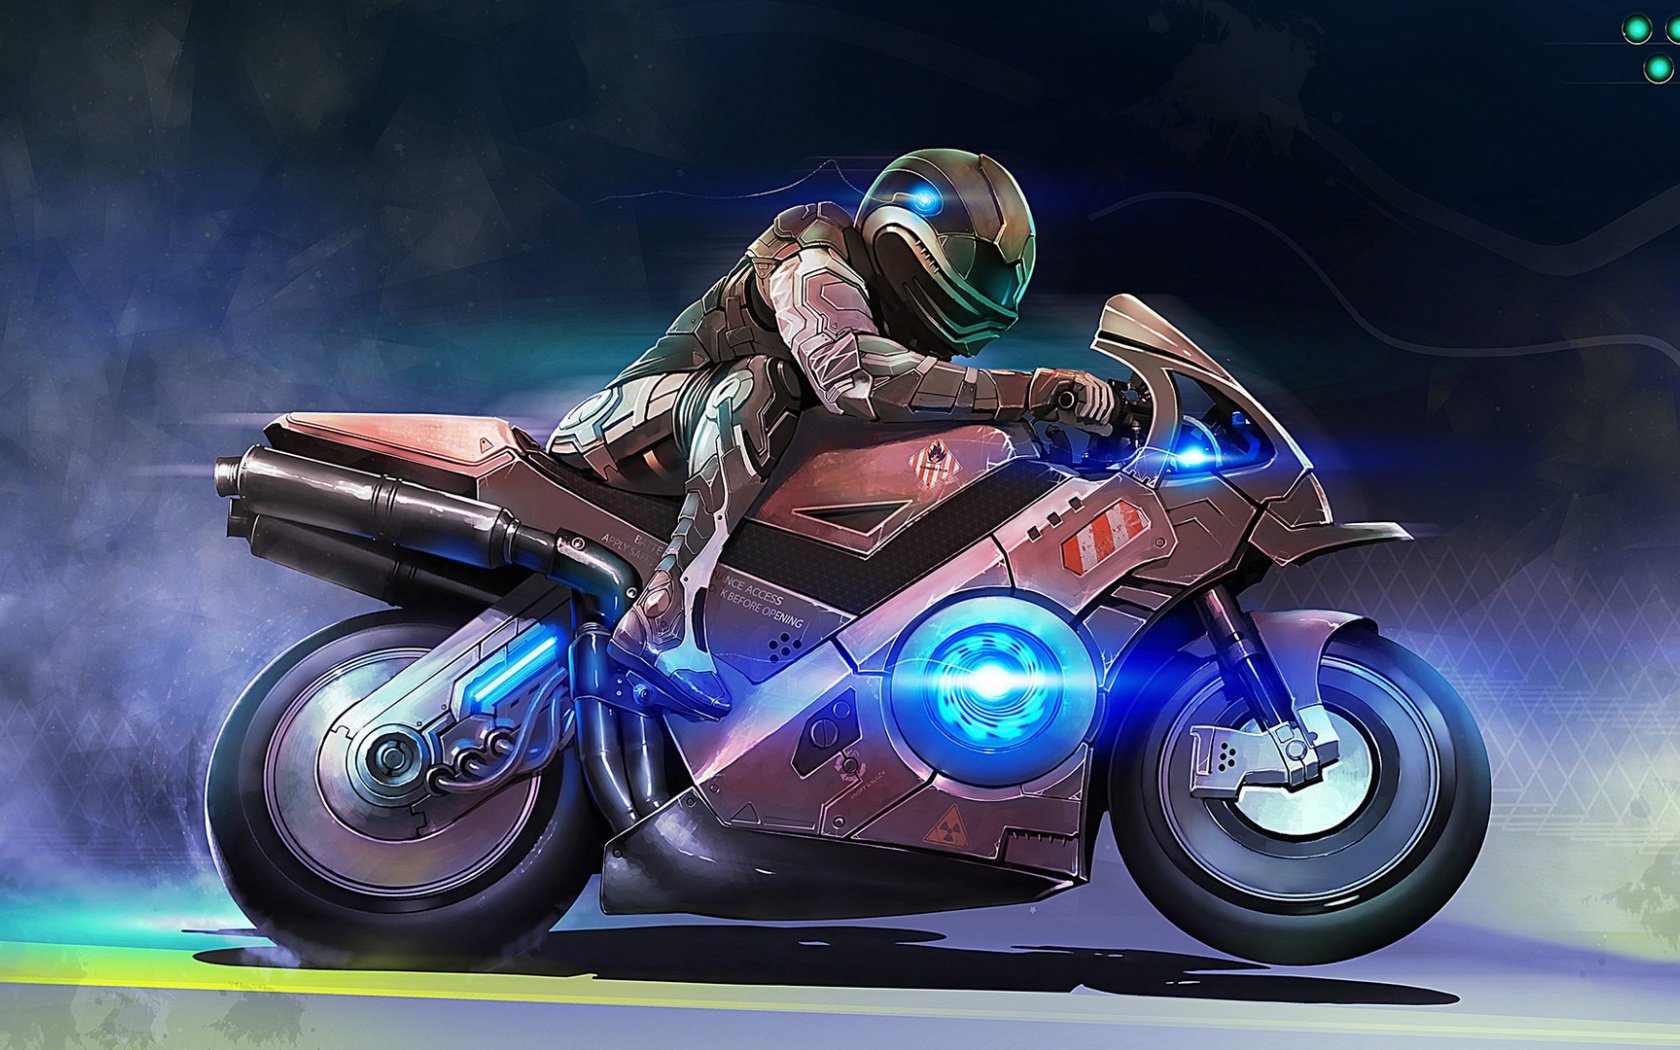 [48 ] Motorcycle Art Wallpaper